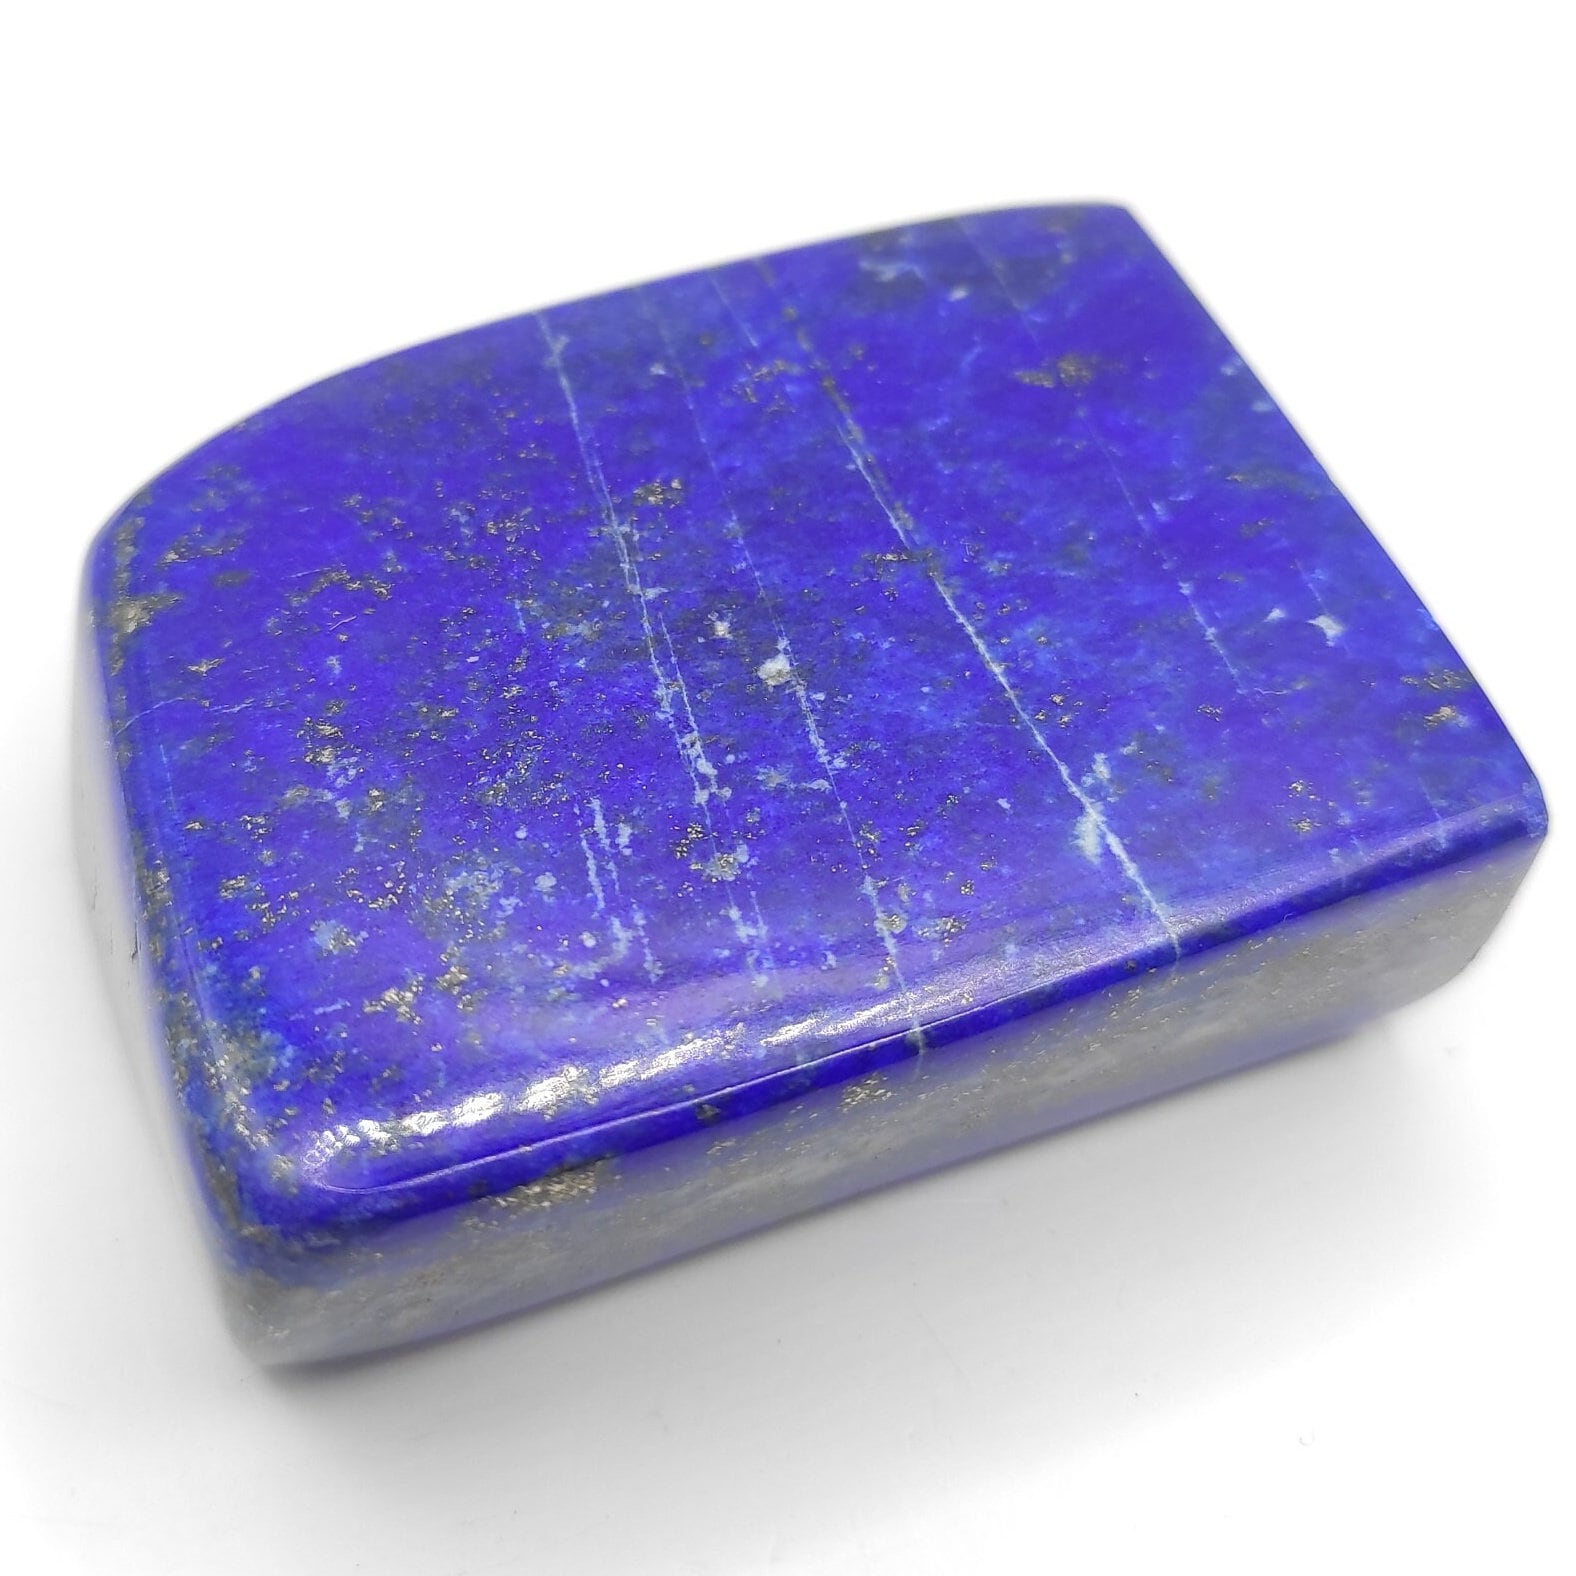 225g Lapis Lazuli Freeform - Polished Lapis Lazuli - High Quality Blue Lapis Lazuli - Polished Crystals - Sar-e-Sang, Afghanistan